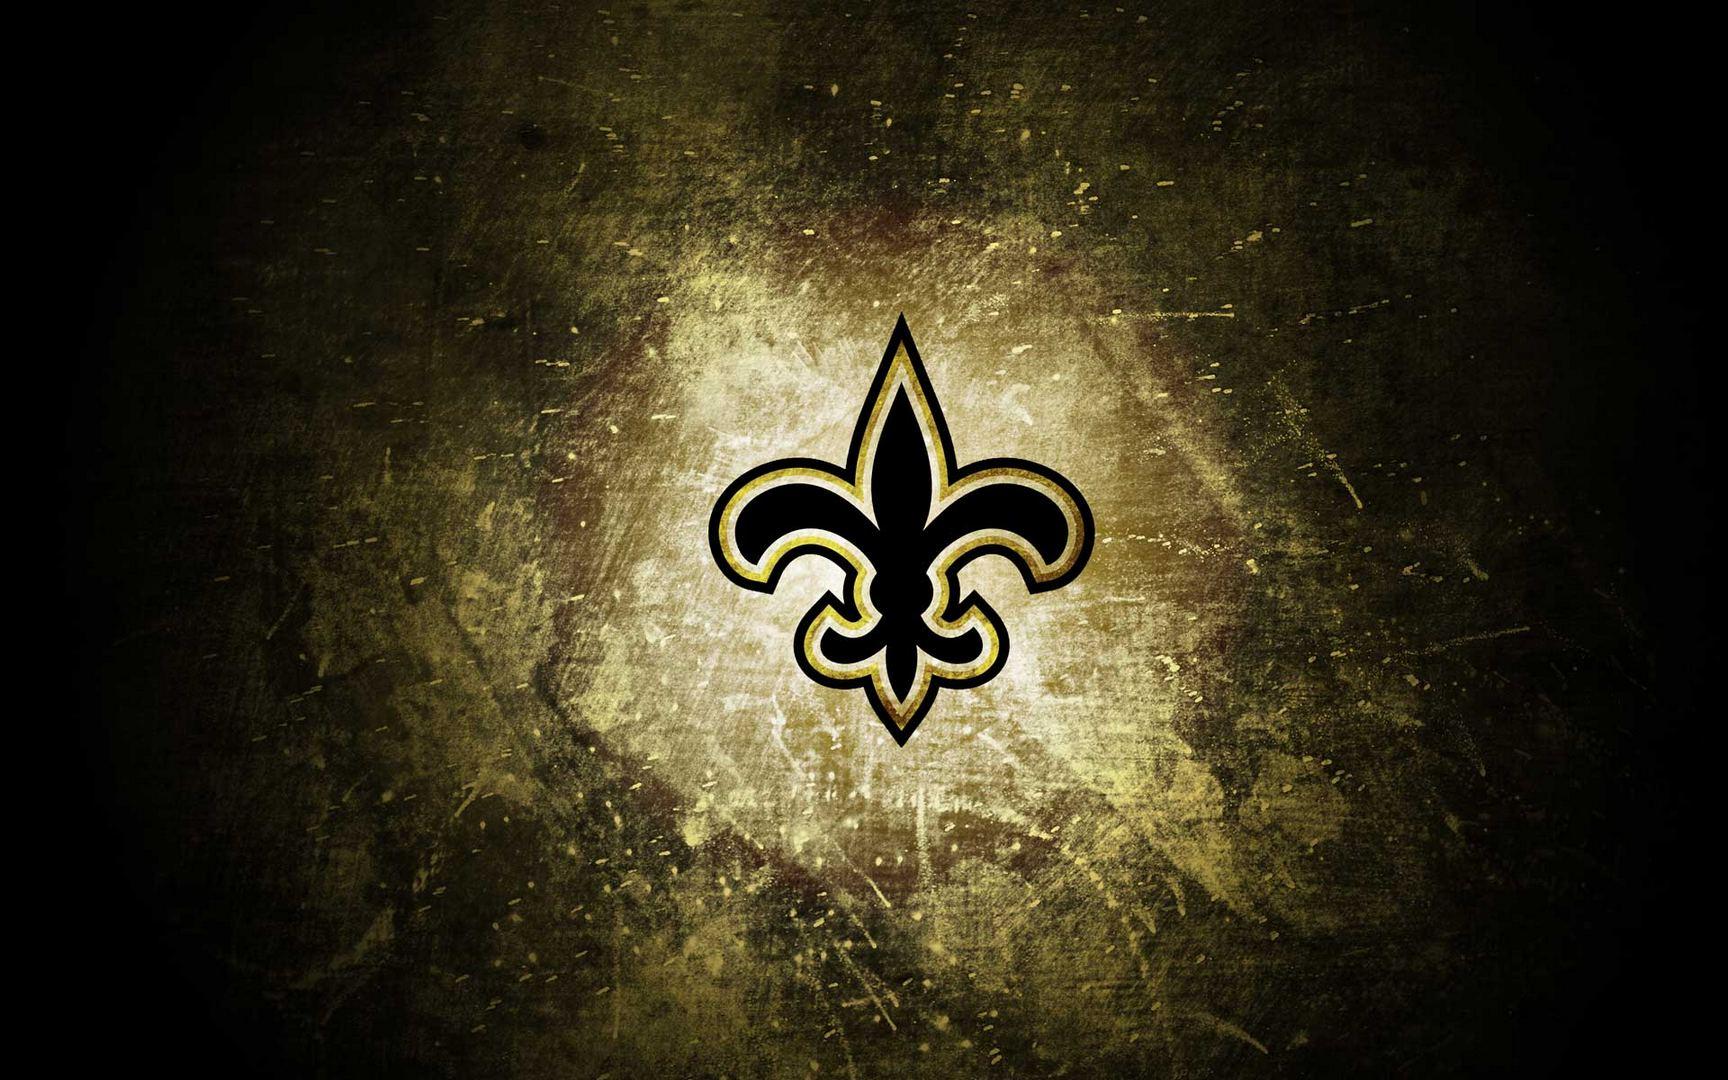 New Orleans Saints wallpaper HD free download